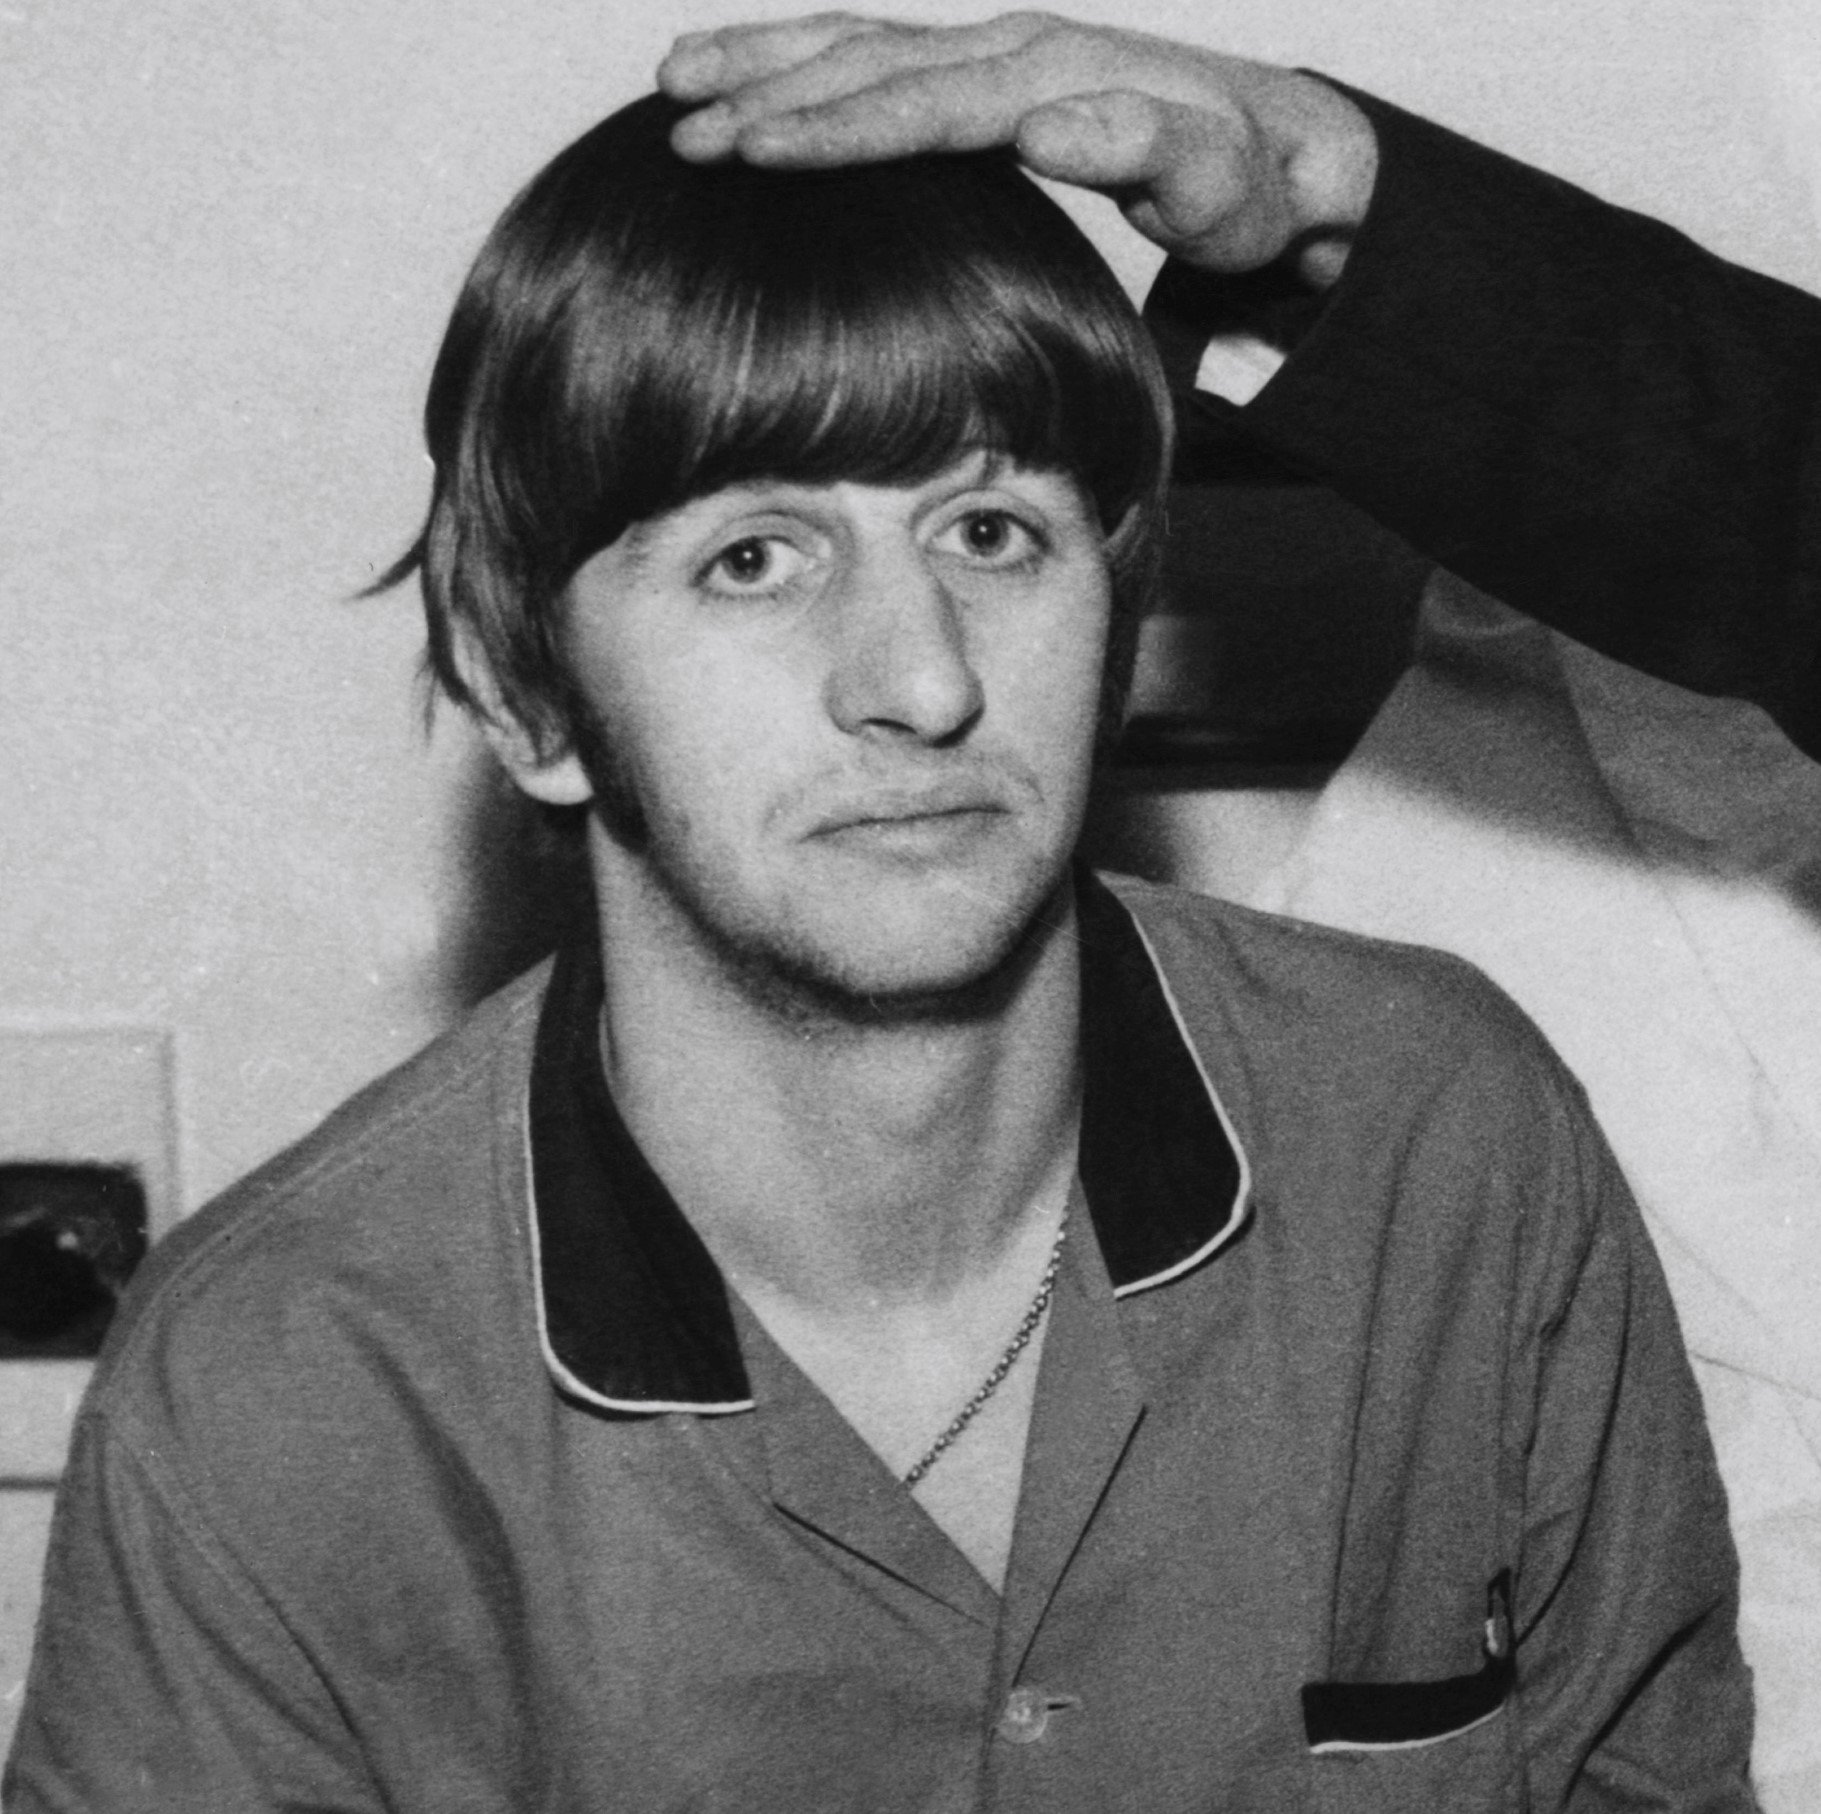 Ringo Starr looking sad during The Beatles' "Love Me Do" era